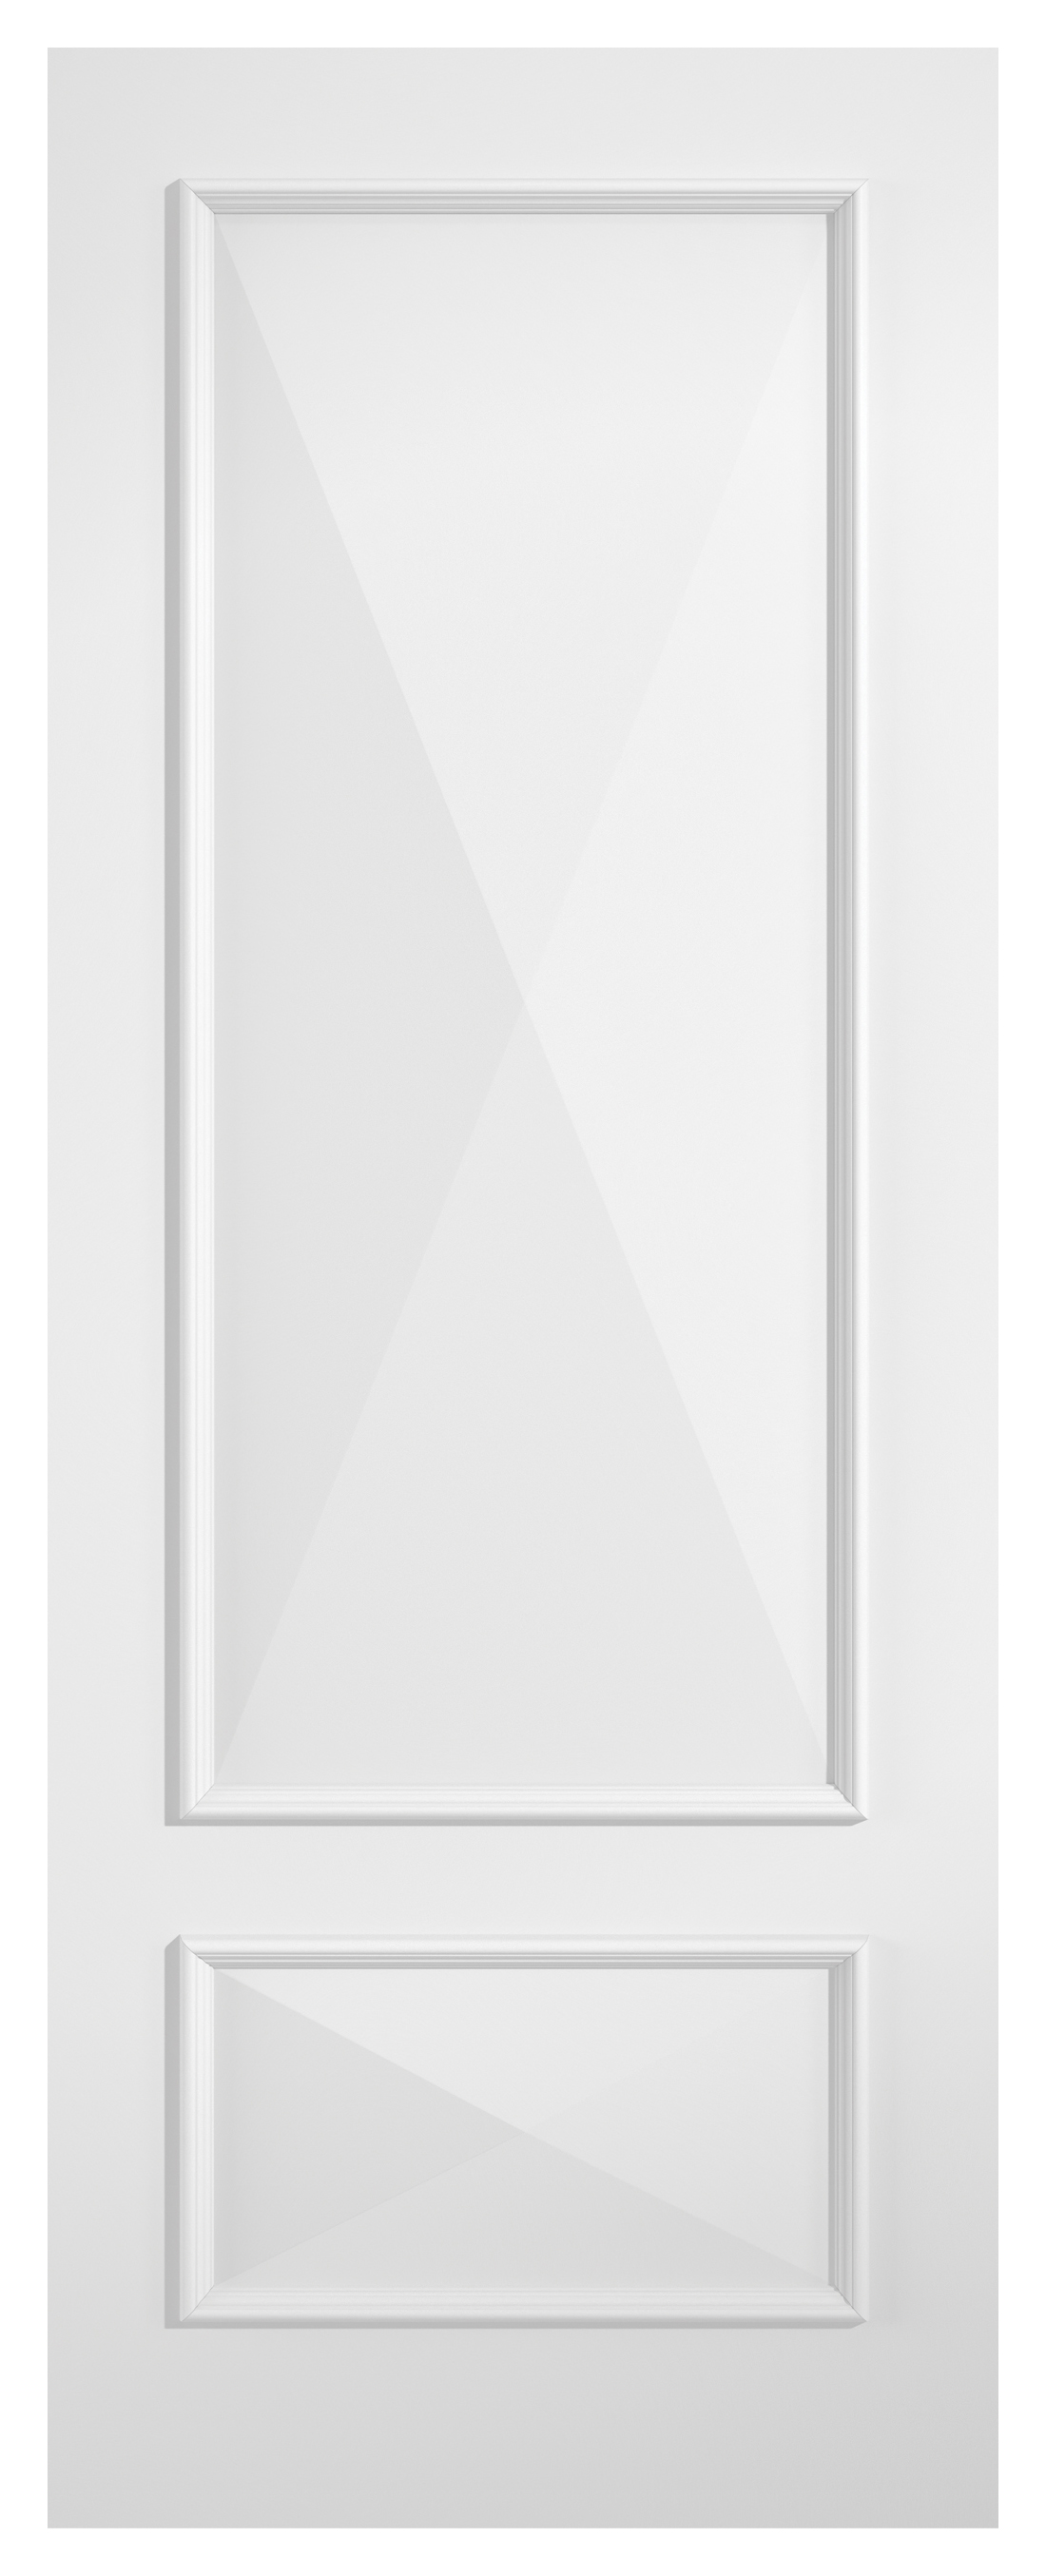 Image of LPD Internal Knightsbridge 2 Panel Primed Plus White Solid Core Door - 762 x 1981mm